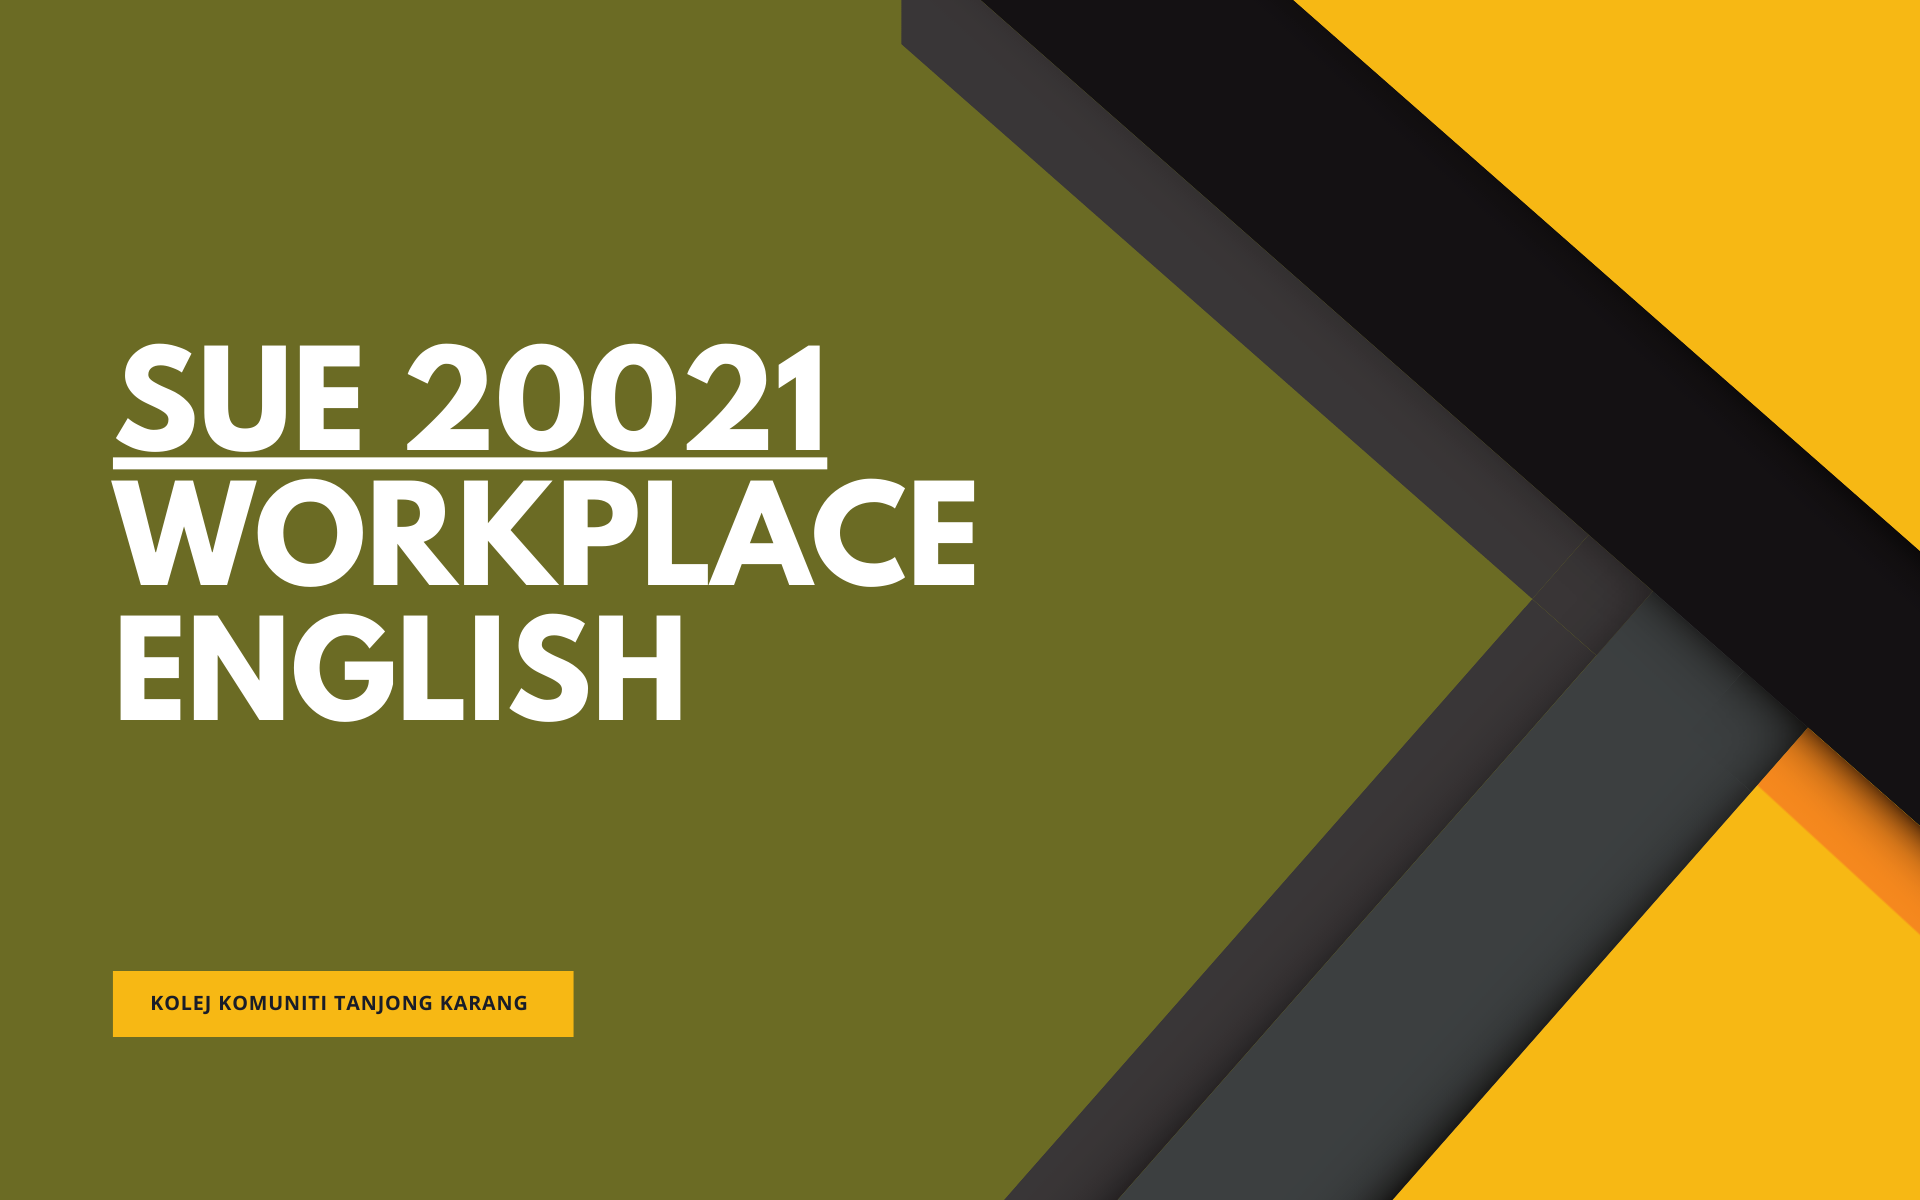 KKTK SUE 20021 WORKPLACE ENGLISH